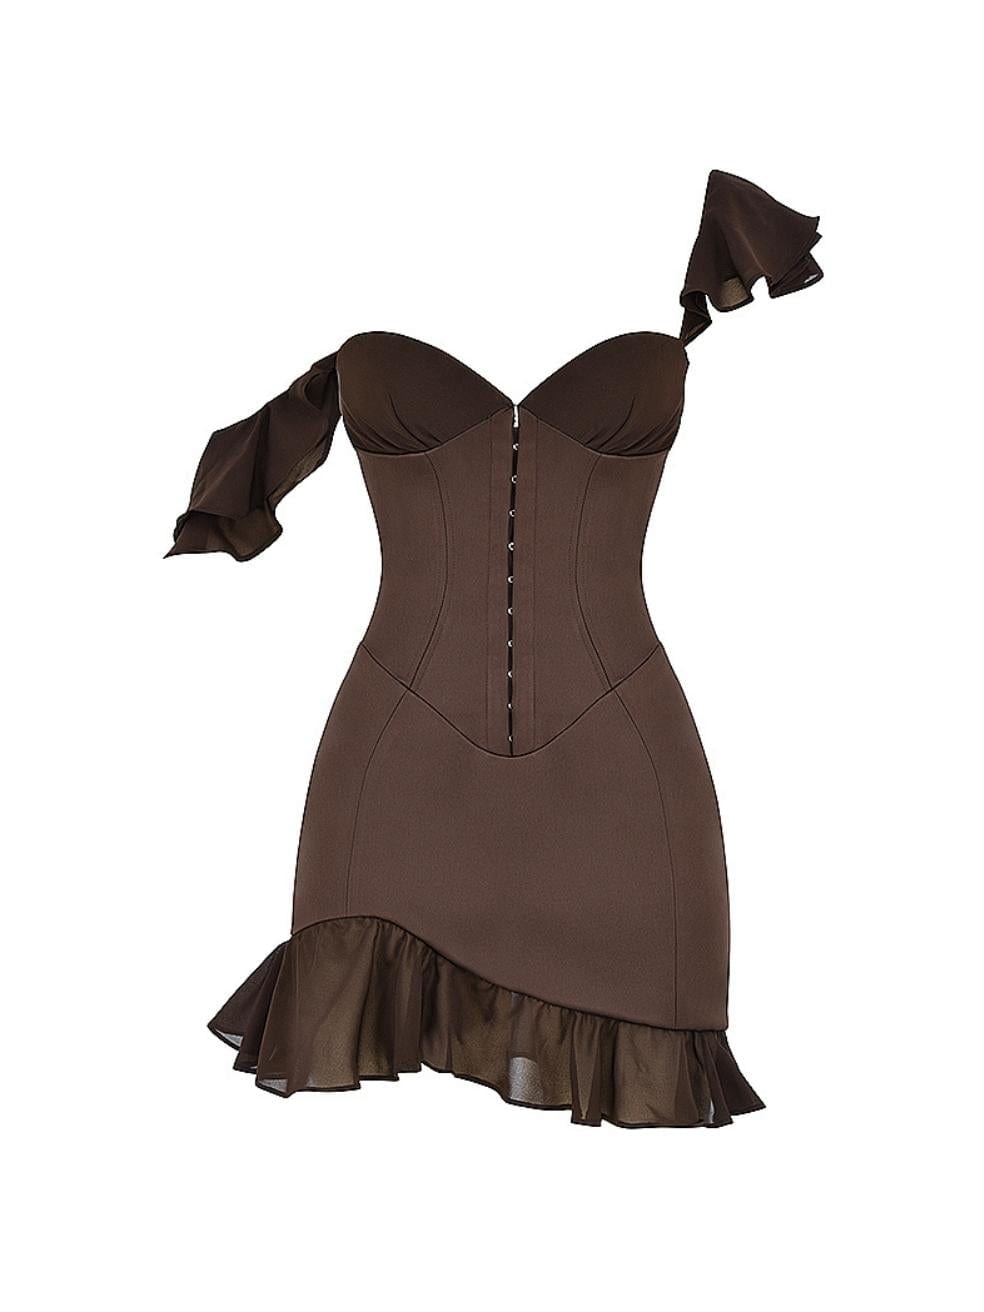 Dionne Ruffle Dress in Brown